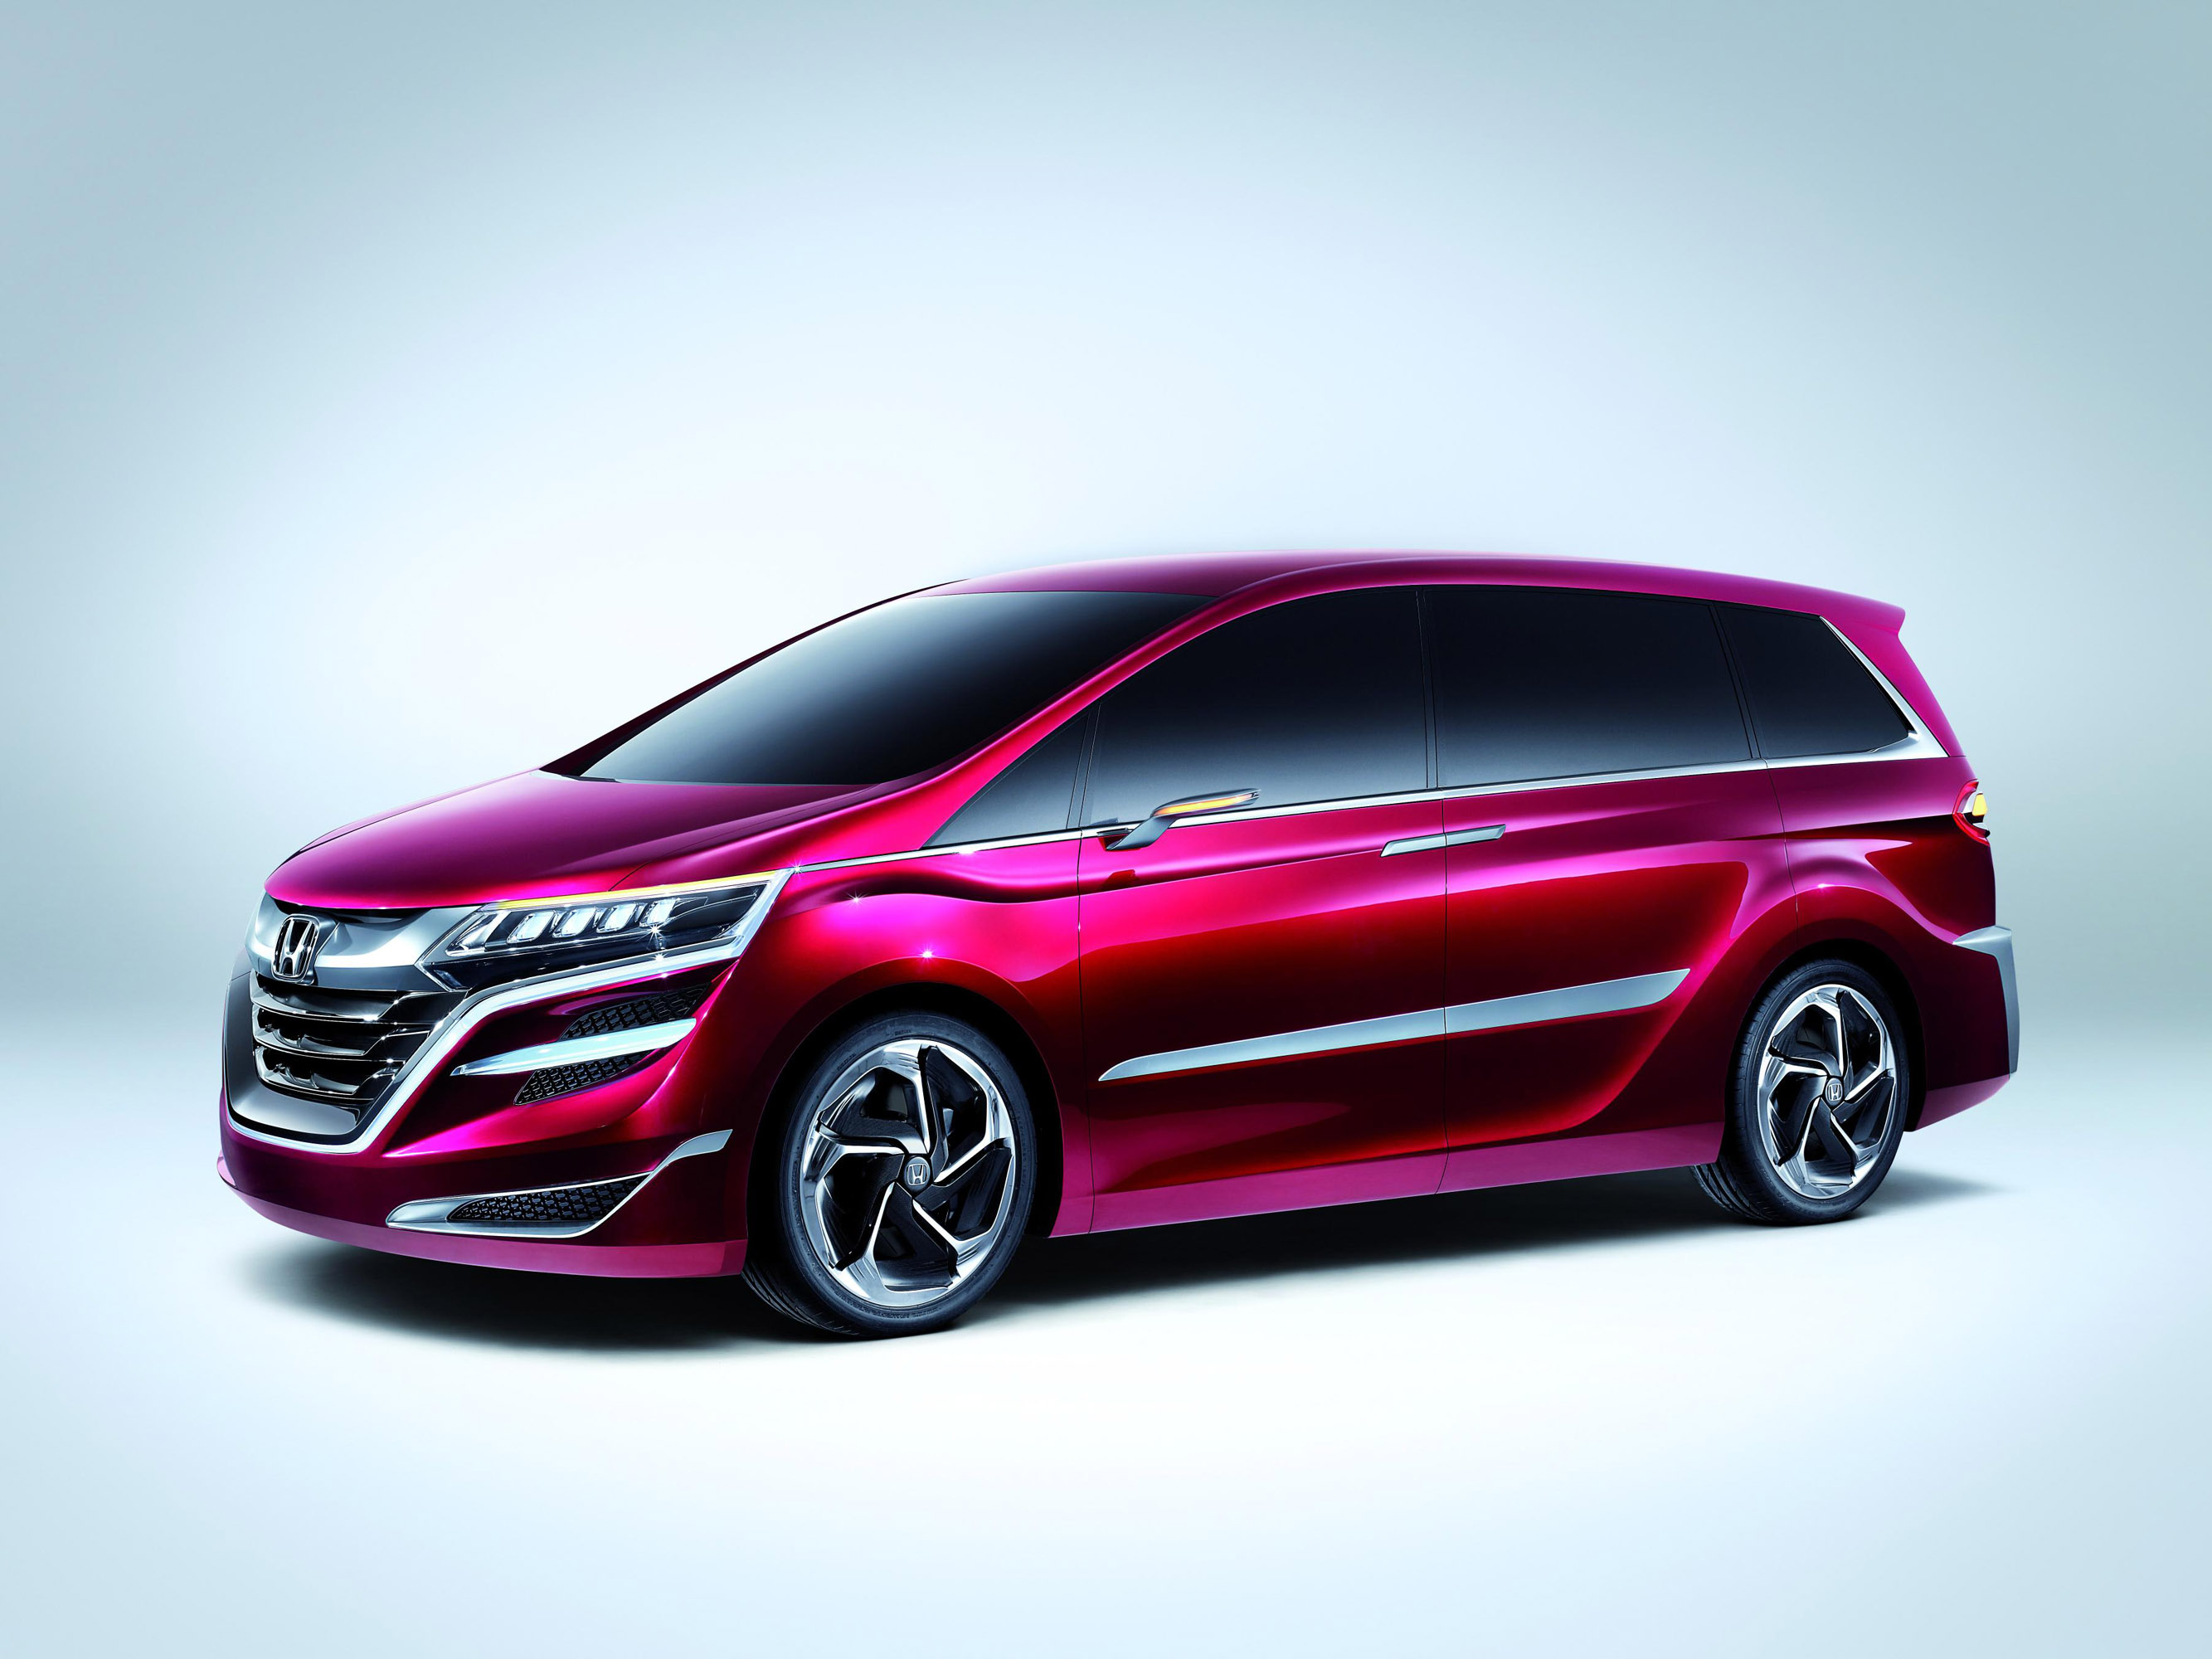 Honda Concept M And Jade Models Revealed In Shanghai